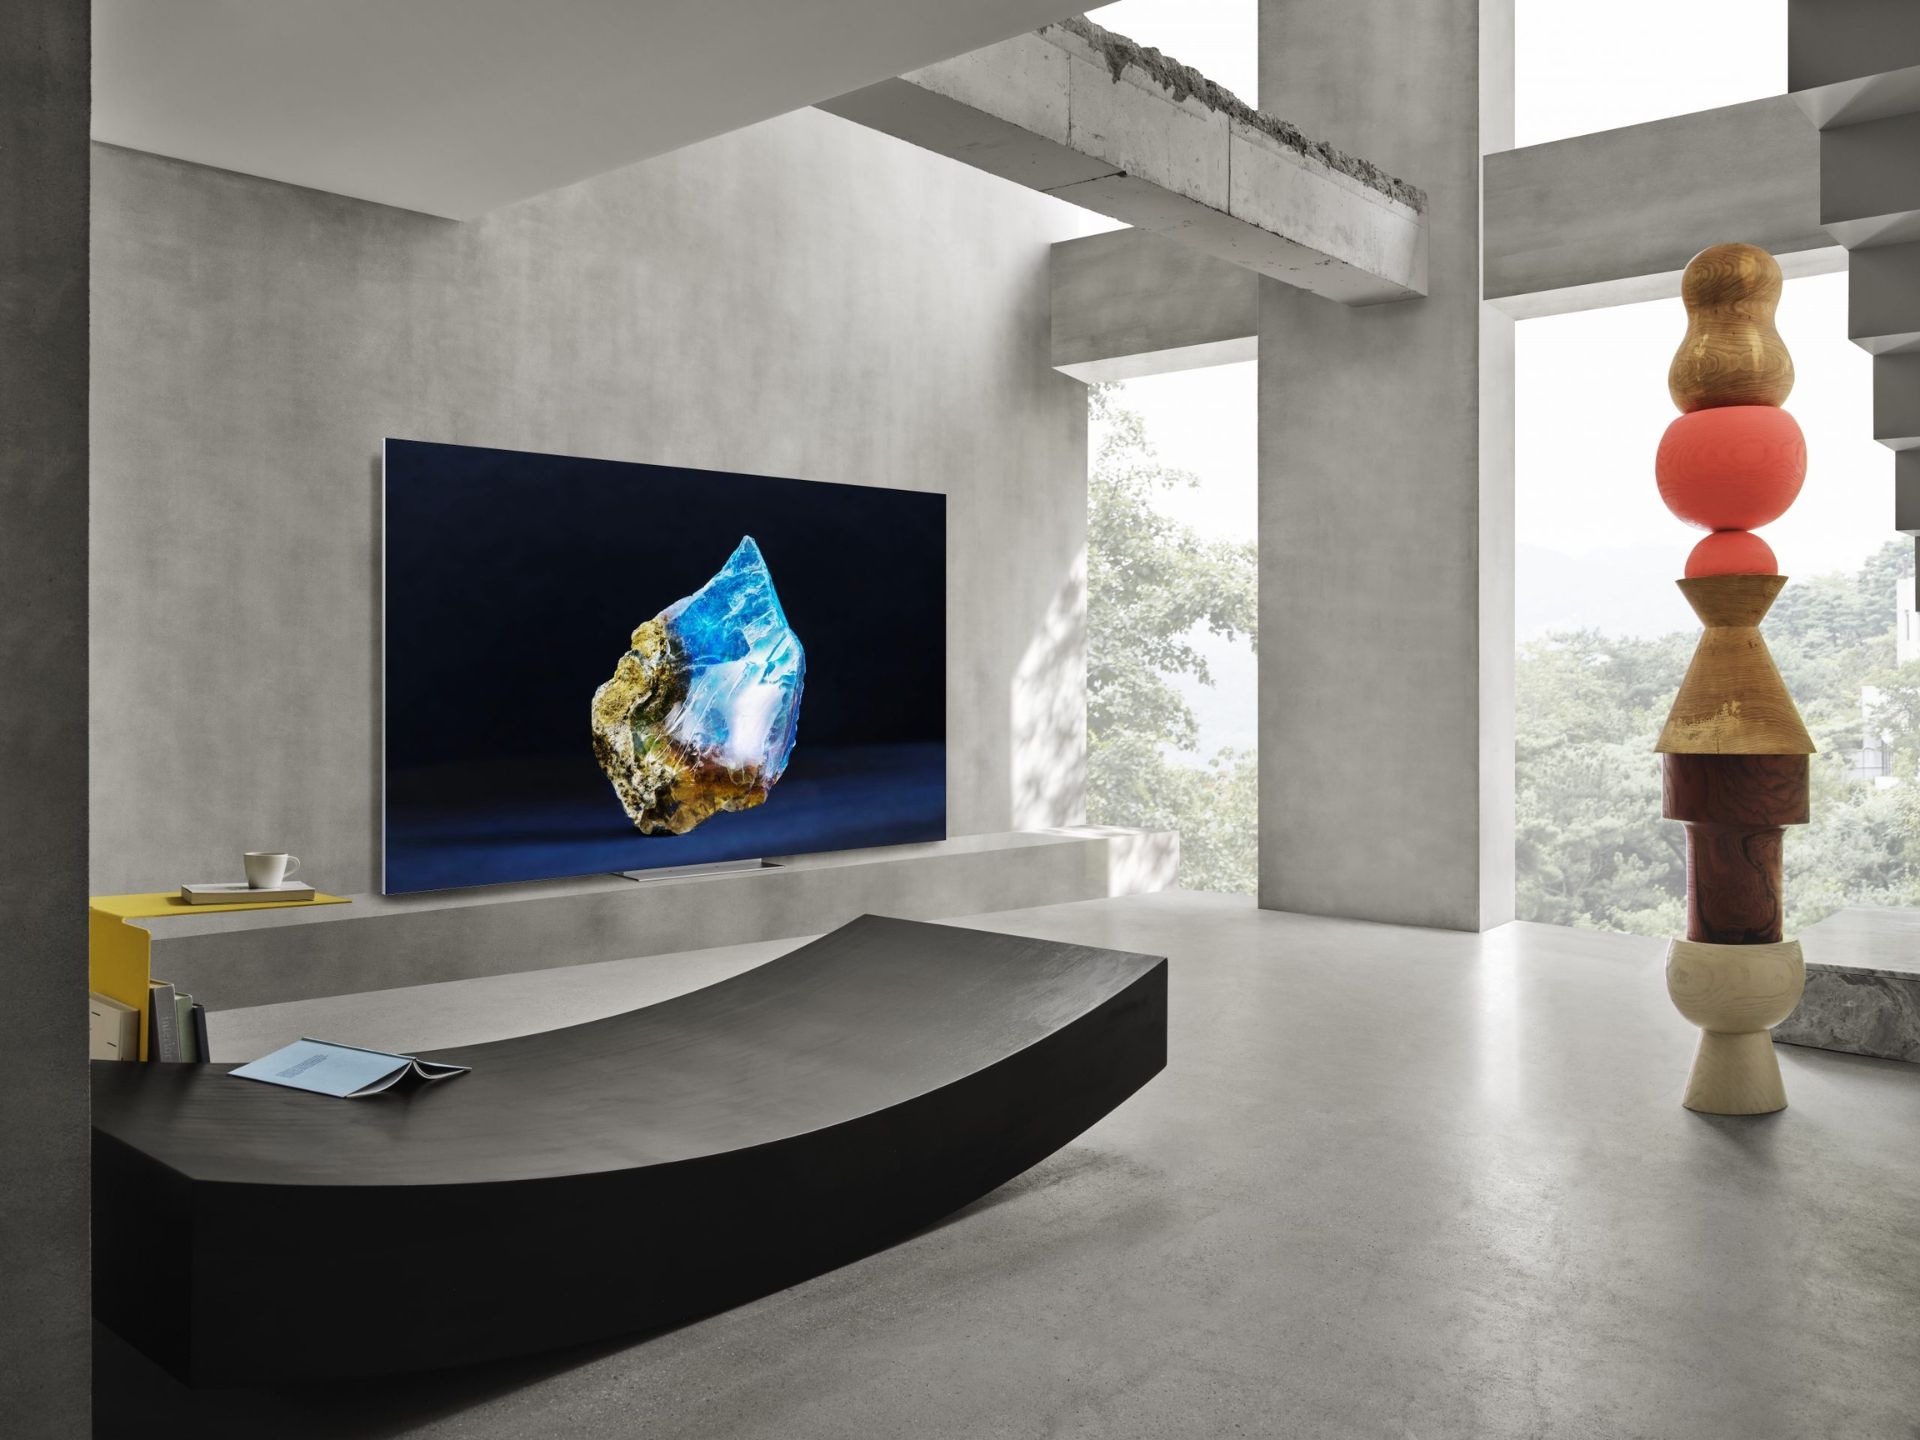 Score up to 52 percent savings on Samsung’s Neo QLED 8K QN800B Series Mini LED Smart TV